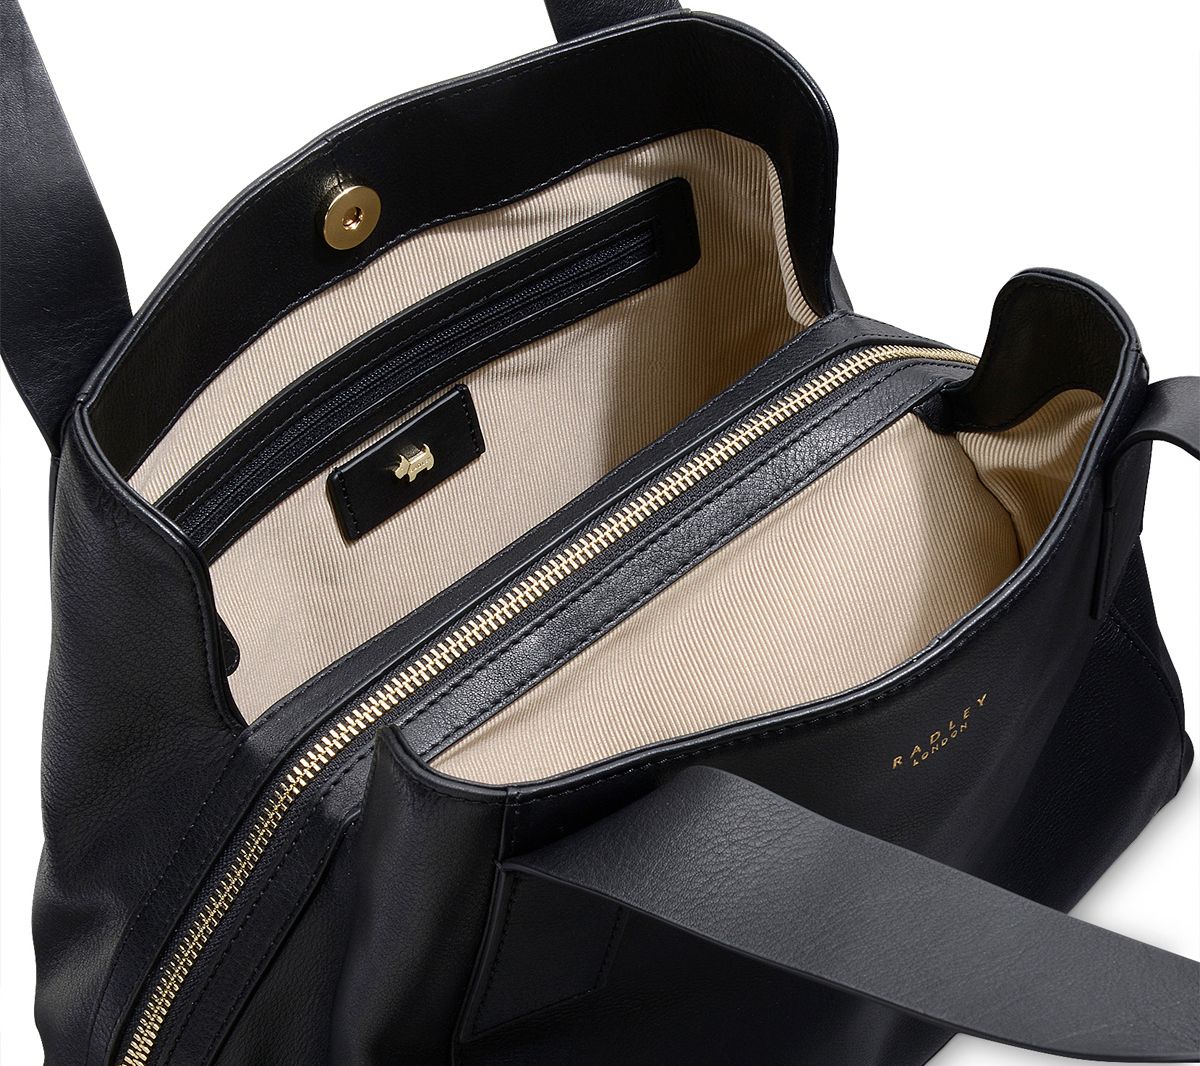 RADLEY London Leather Zip Top Shoulder Bag - QVC.com